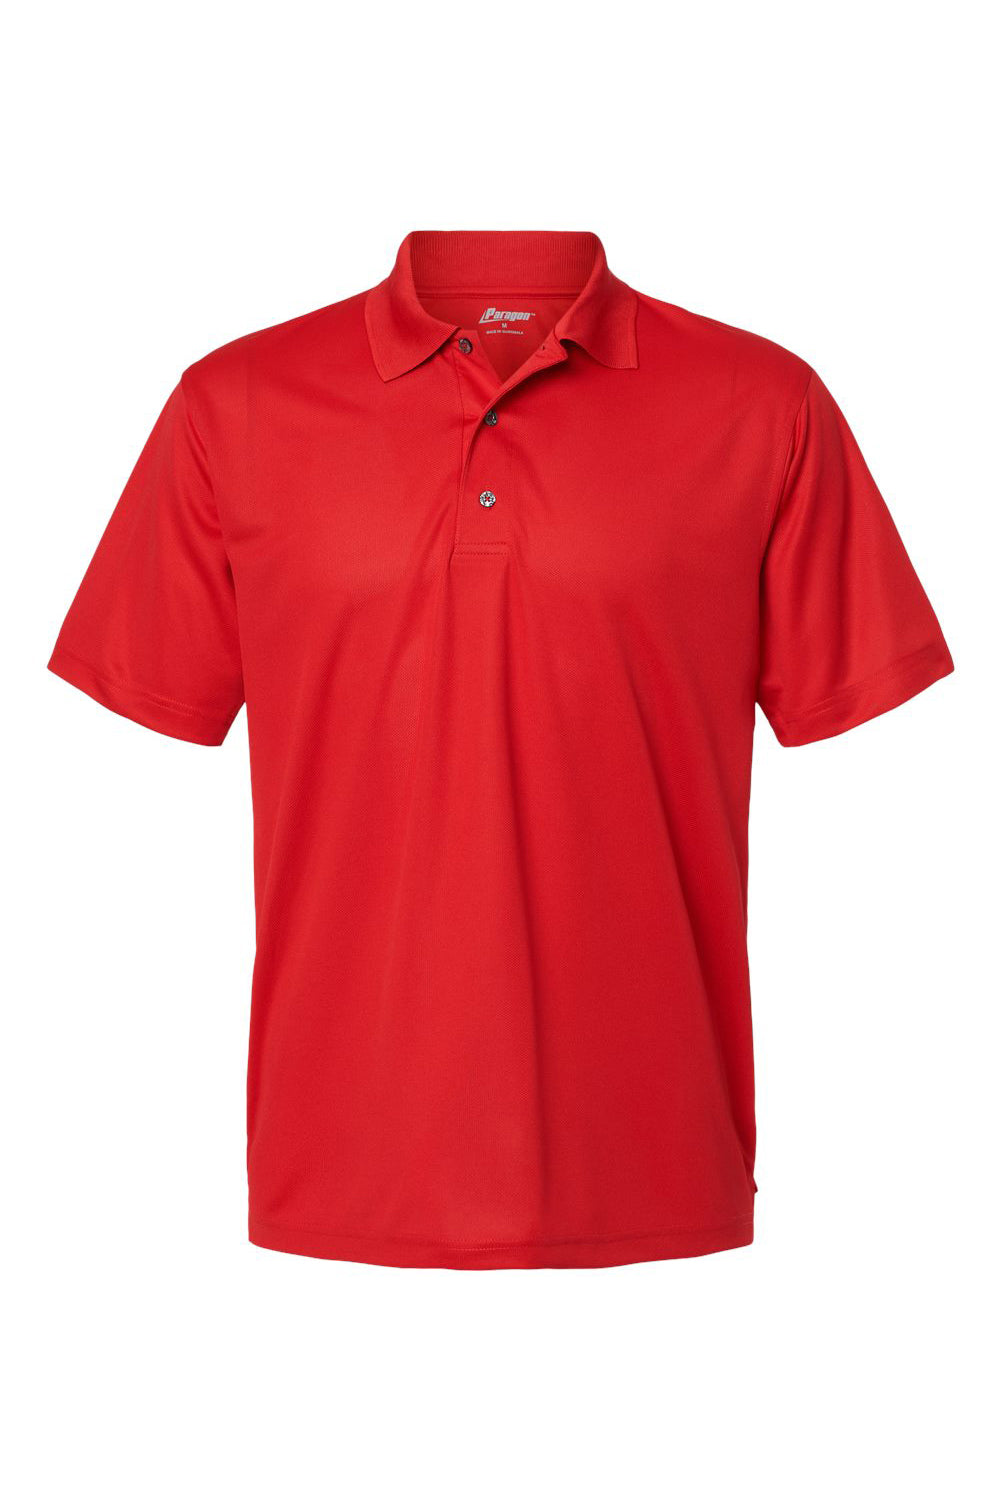 Paragon 100 Mens Saratoga Performance Mini Mesh Short Sleeve Polo Shirt Red Flat Front